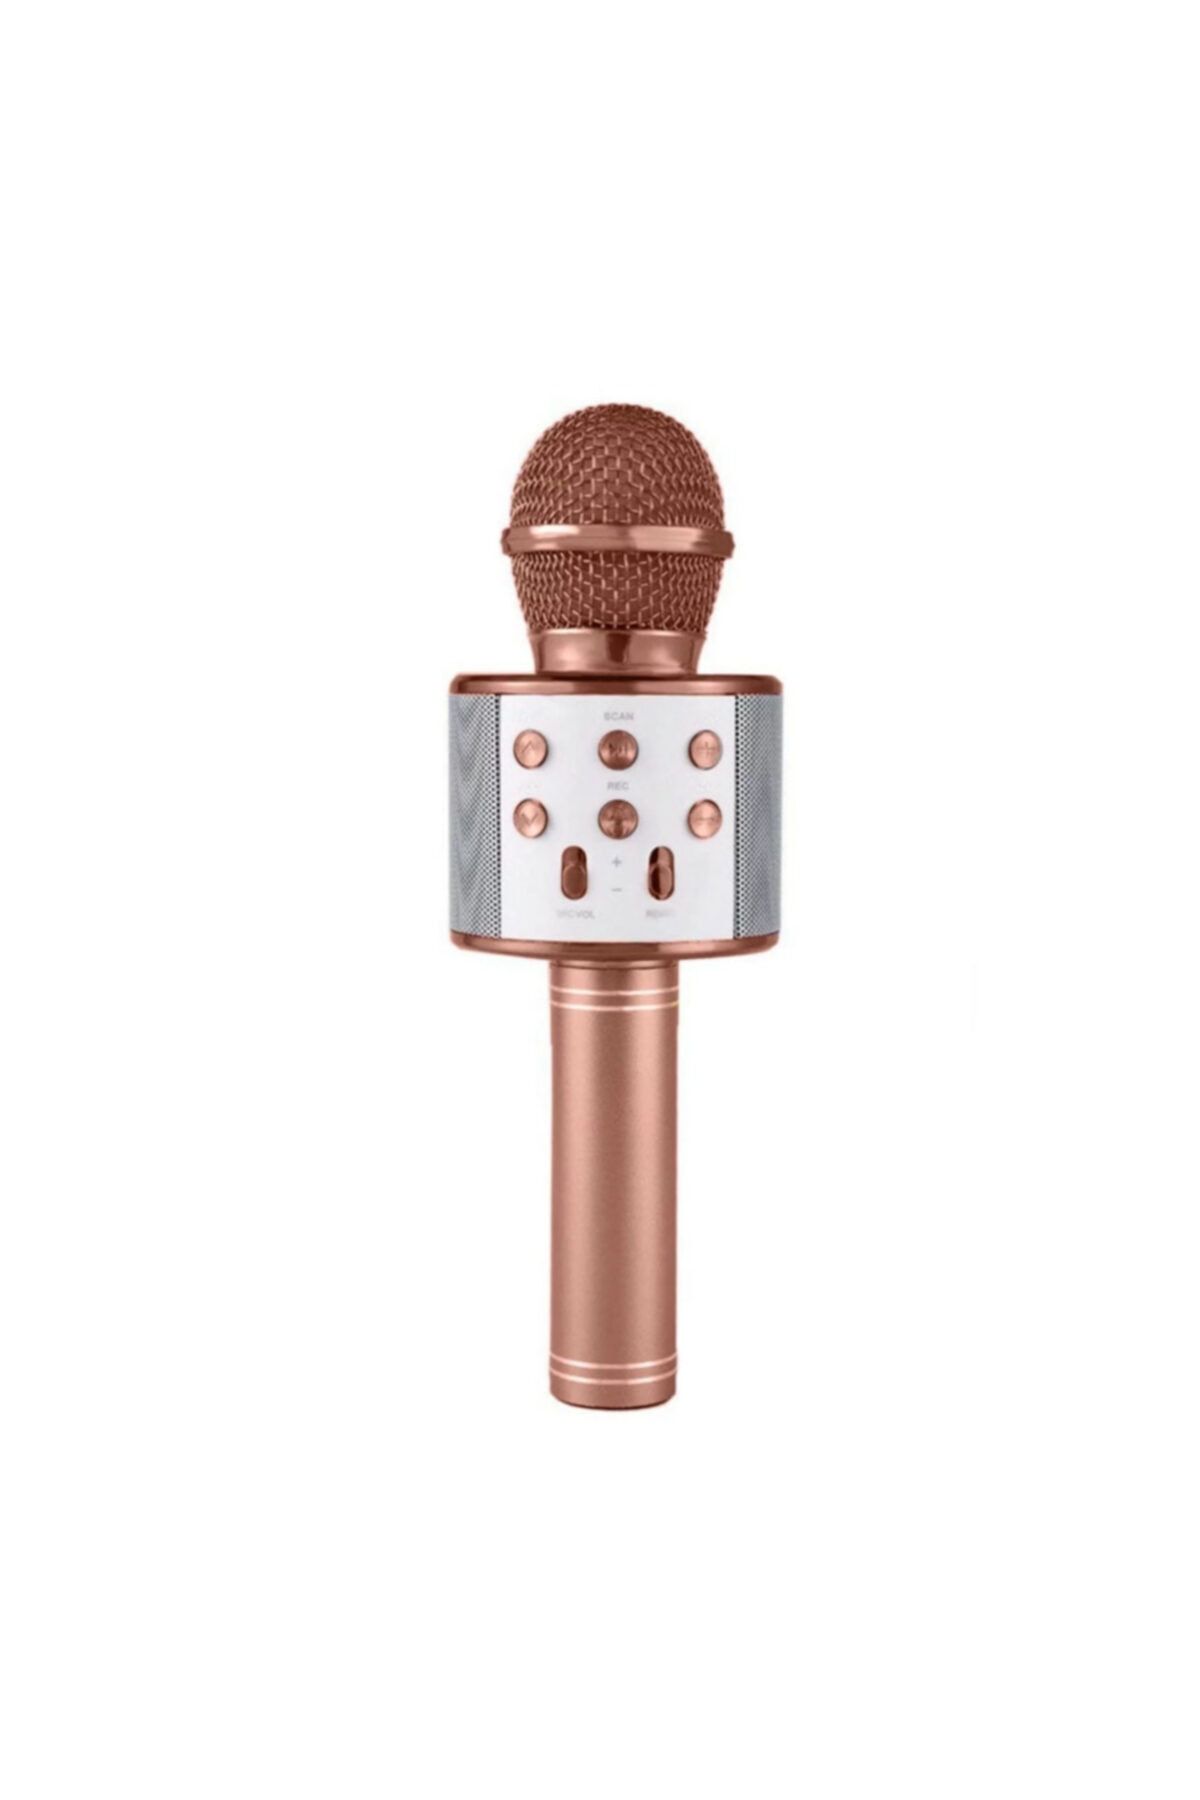 pazariz Wster Ws-858 Rose Gold Karaoke Mikrofon Bluetooth Hoparlör Aux Usb Mikro Sd Kart Girişli